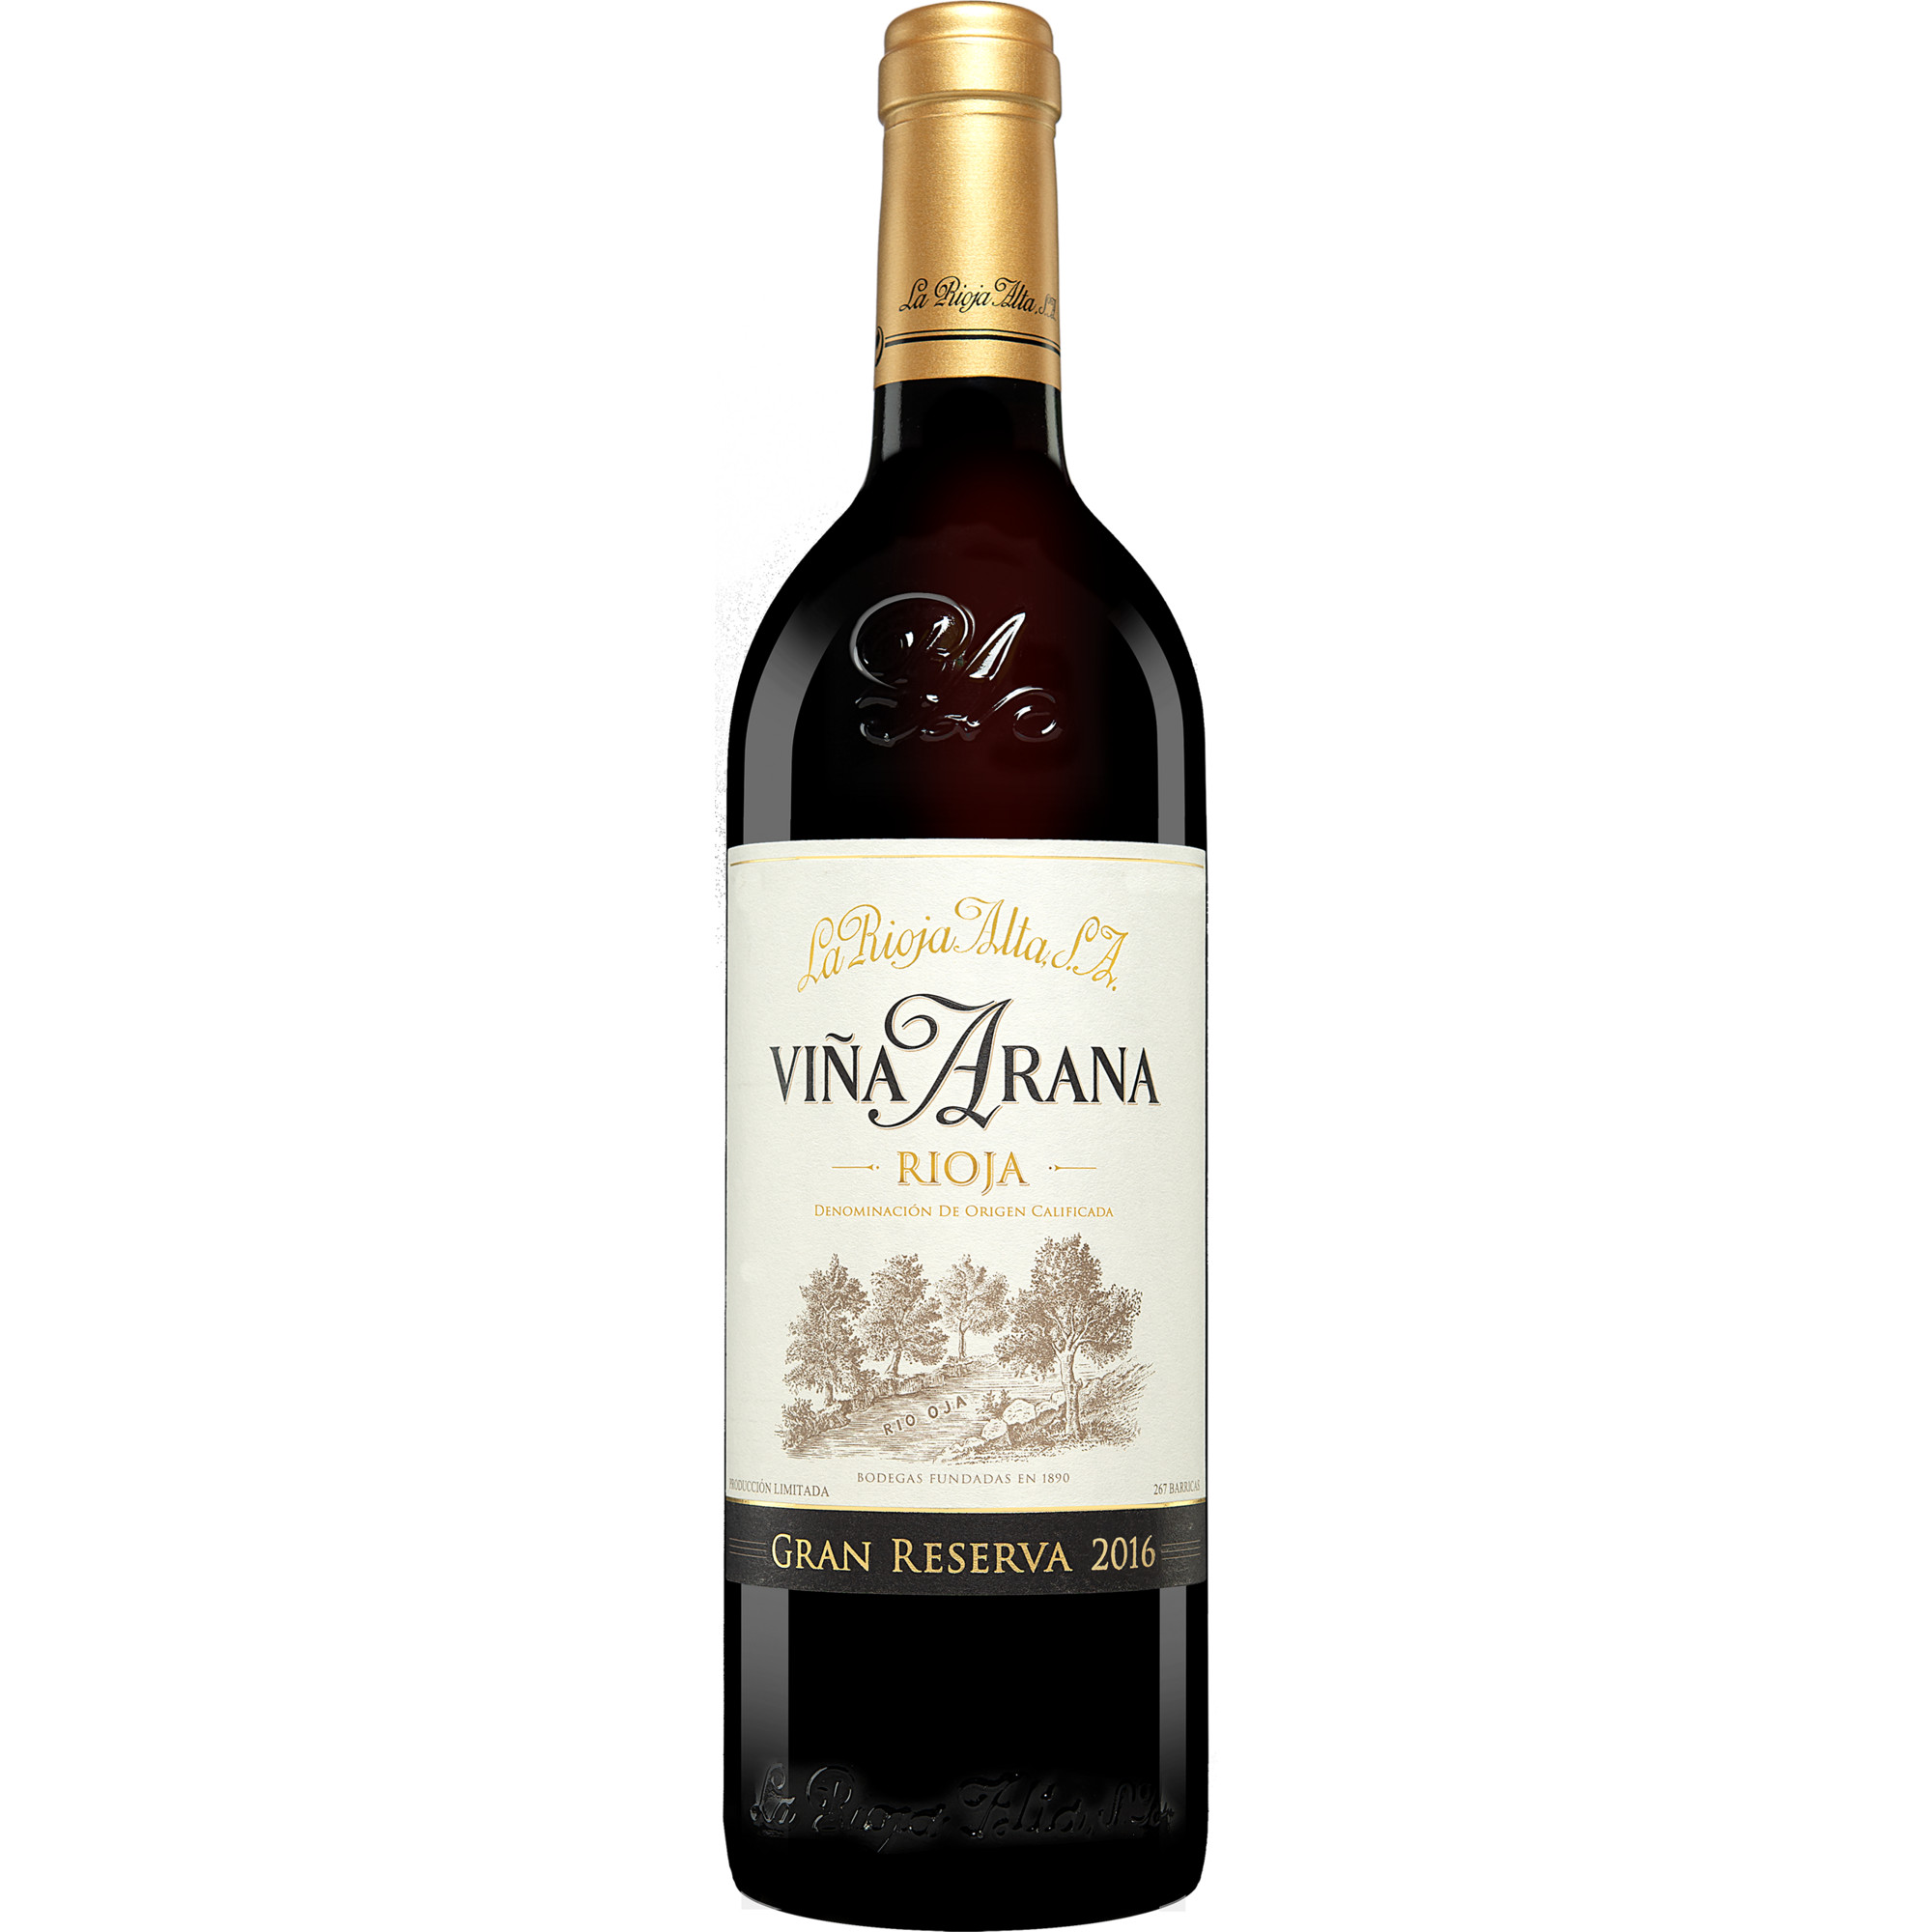 Image of La Rioja Alta Vina Arana Gran Reserva a 2014 - Rotwein, Spanien, trocken, 0,75l